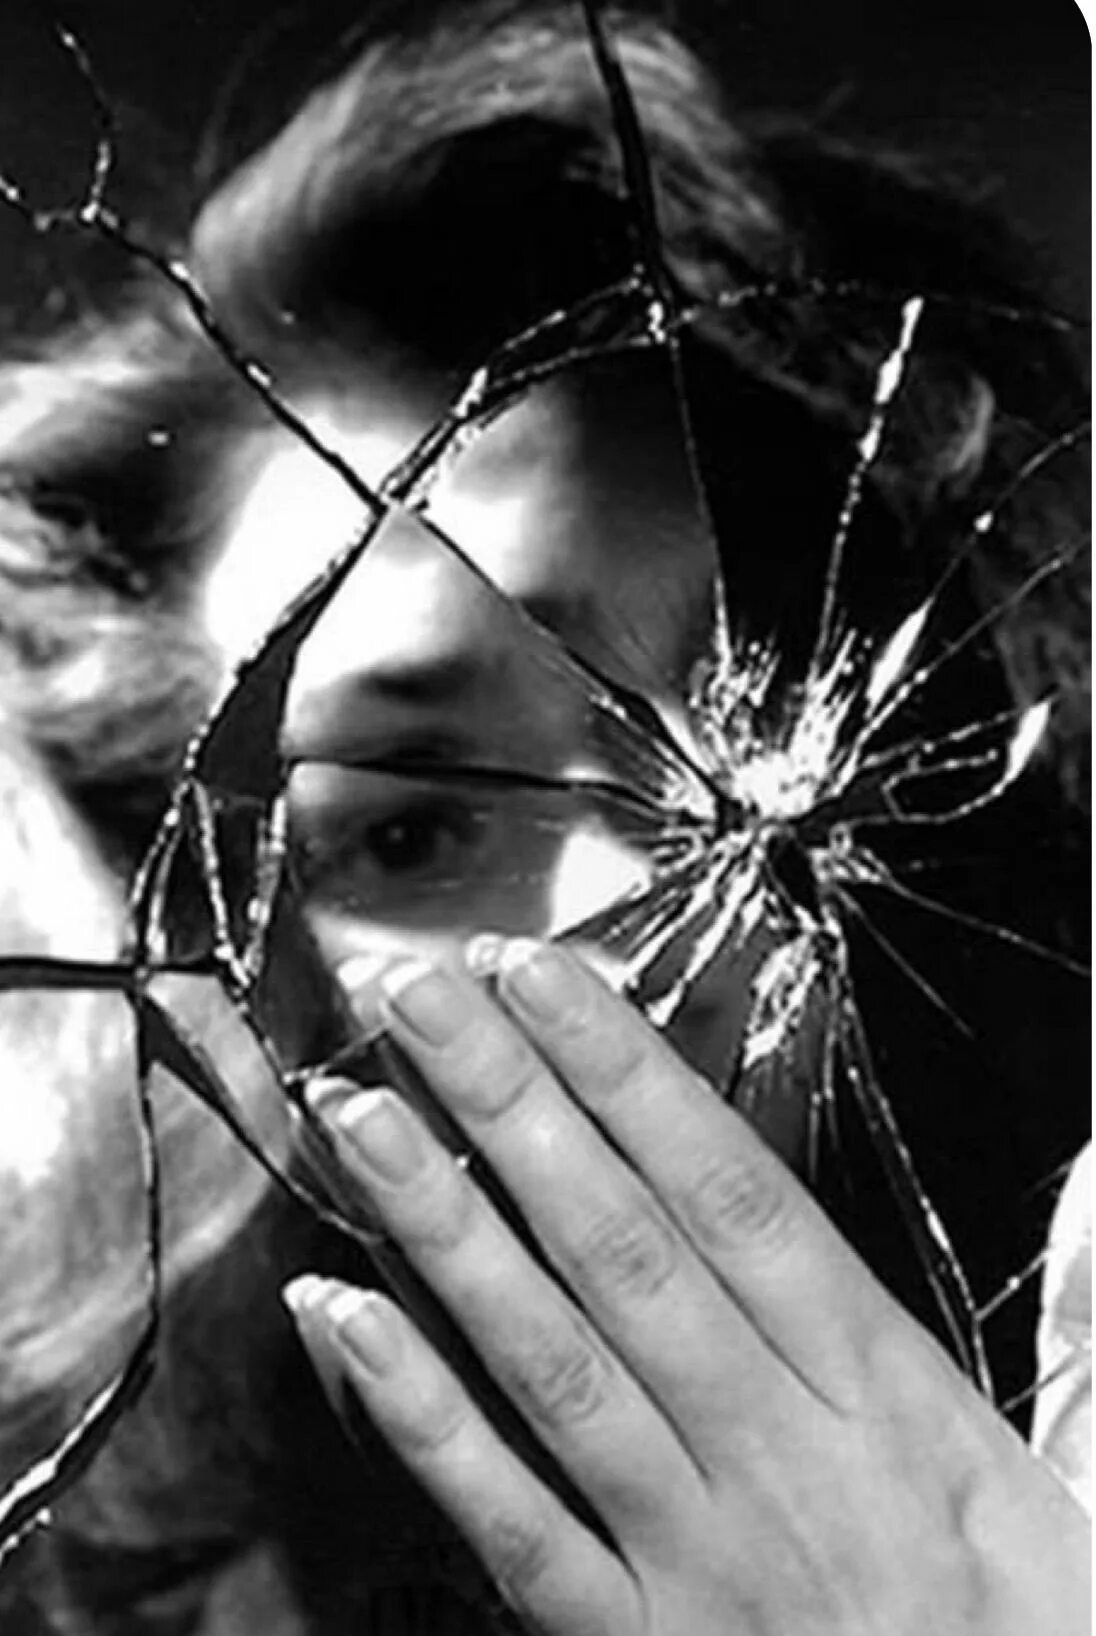 Лицо в разбитом зеркале. Девушка в разбитом зеркале. Разбить стекло.